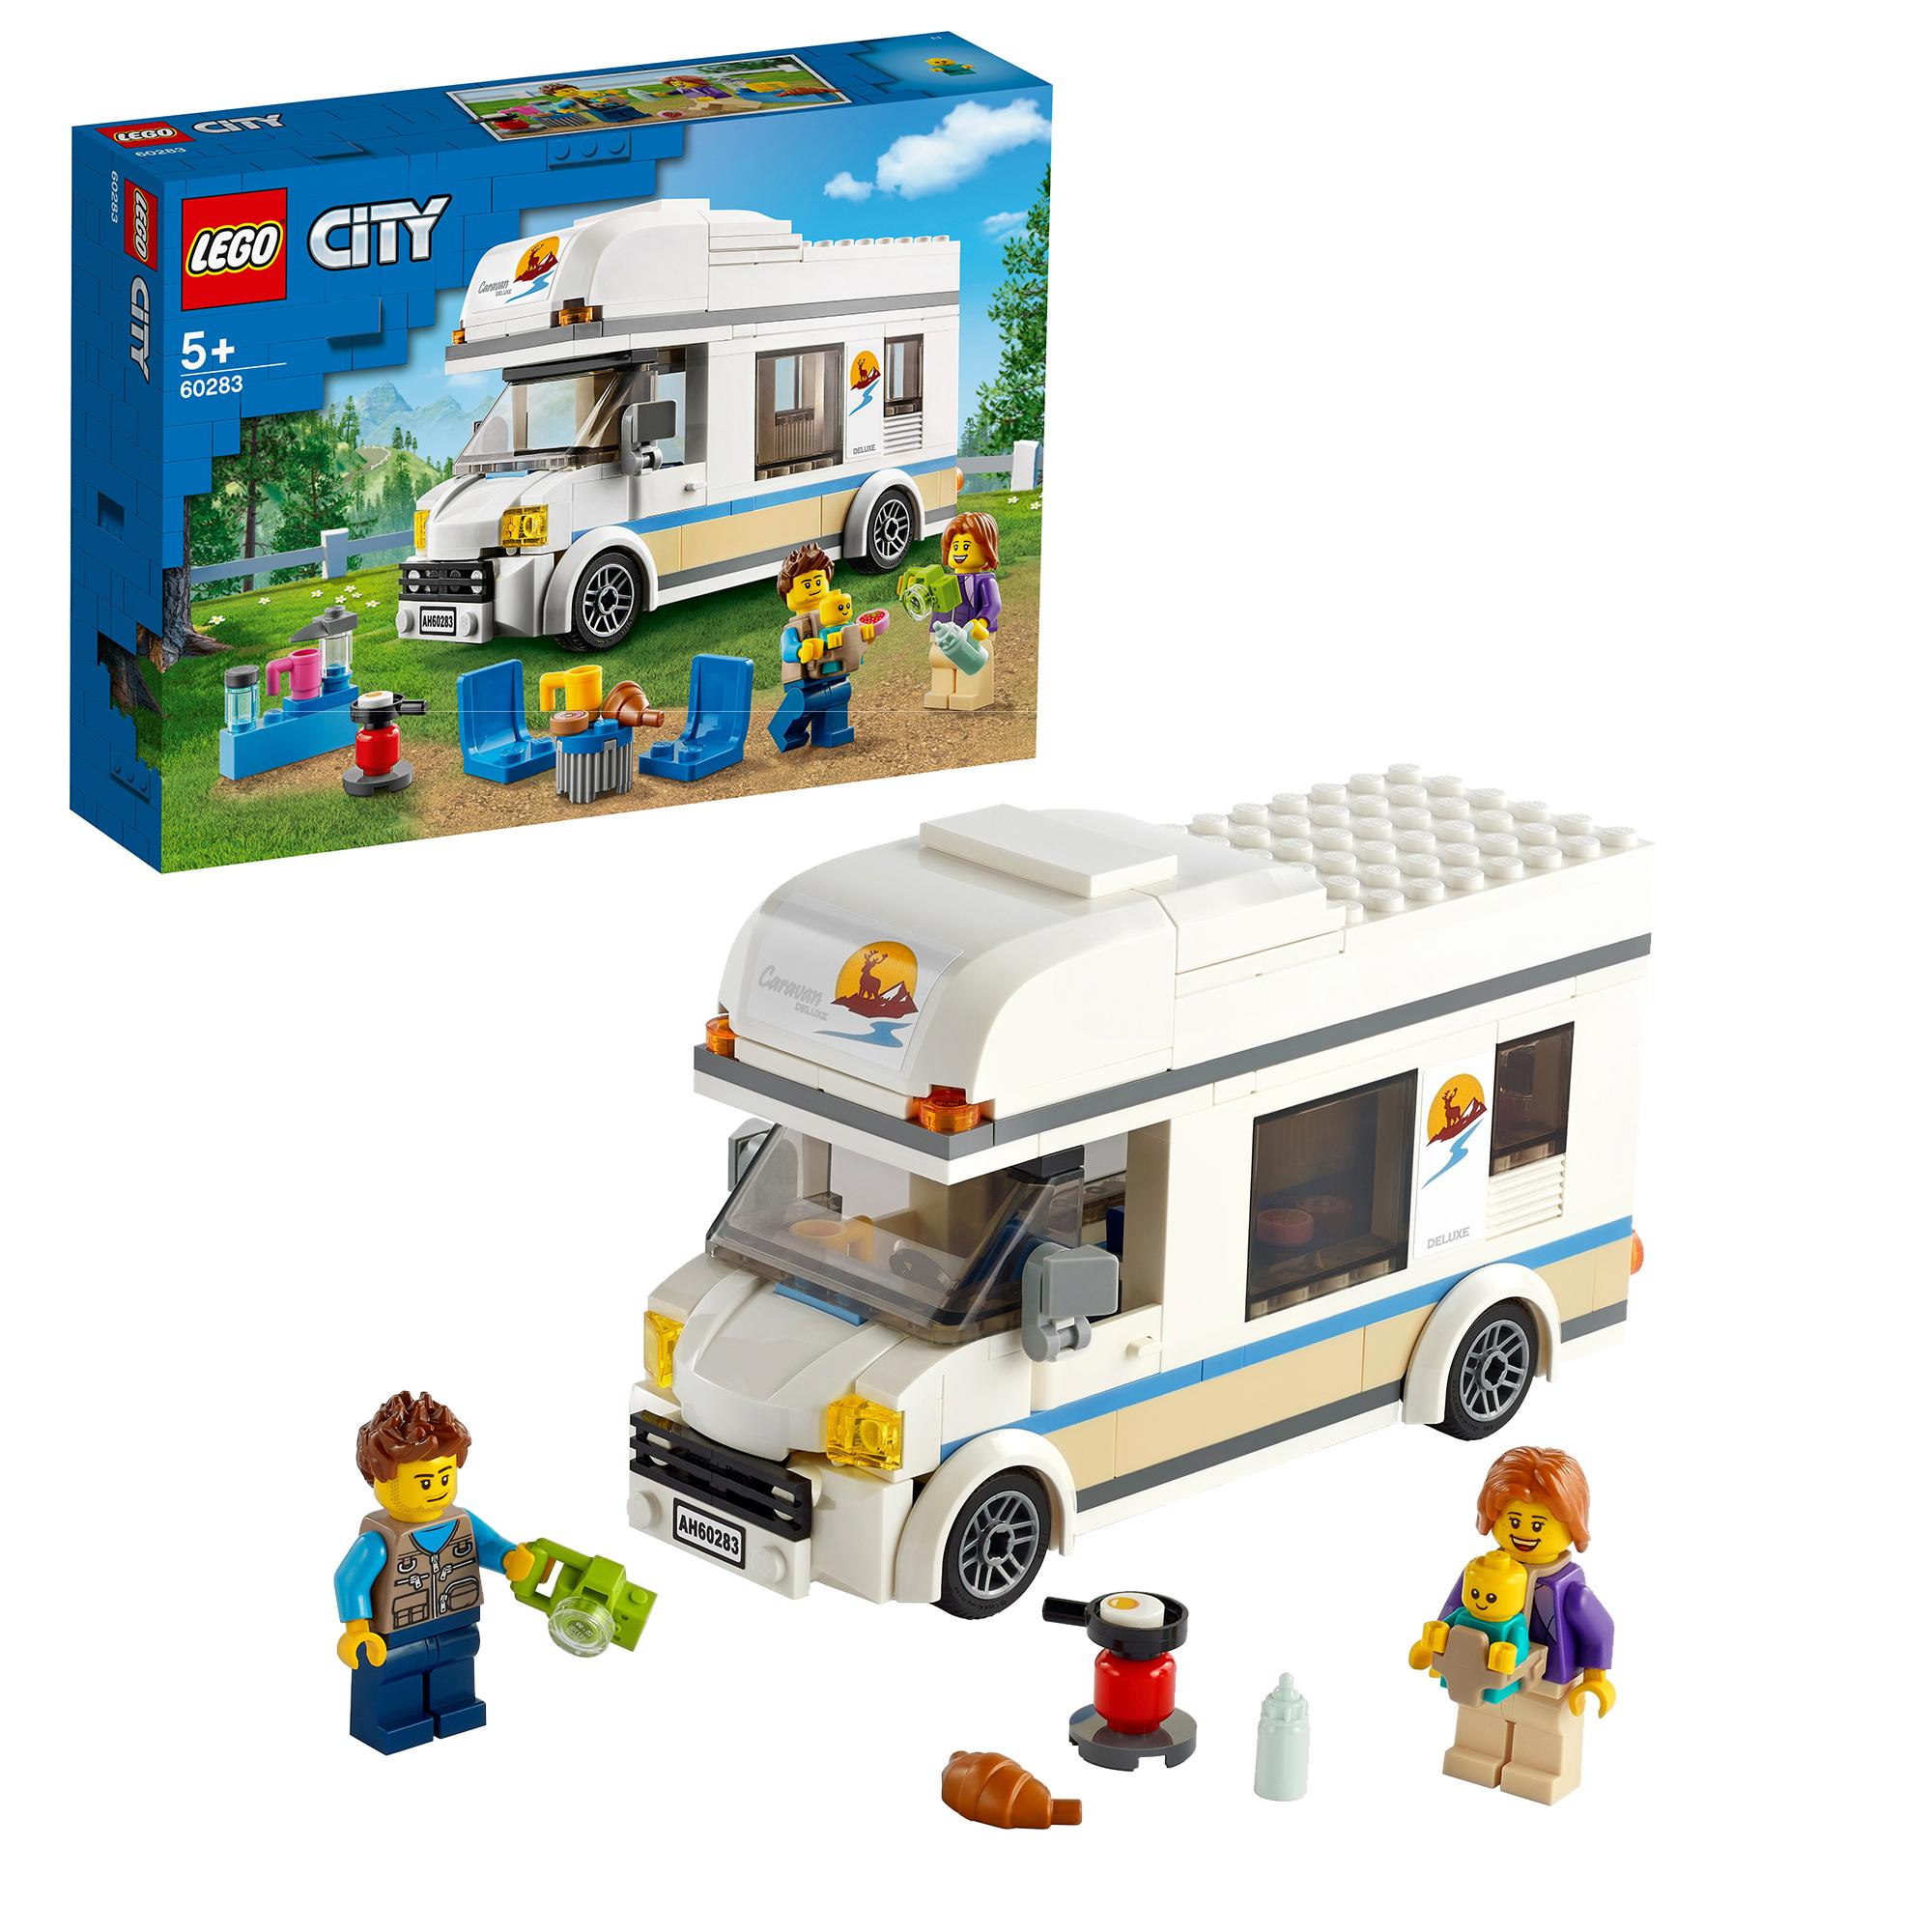 60283 LEGO Mehrfarbig Bausatz, Ferien-Wohnmobil City